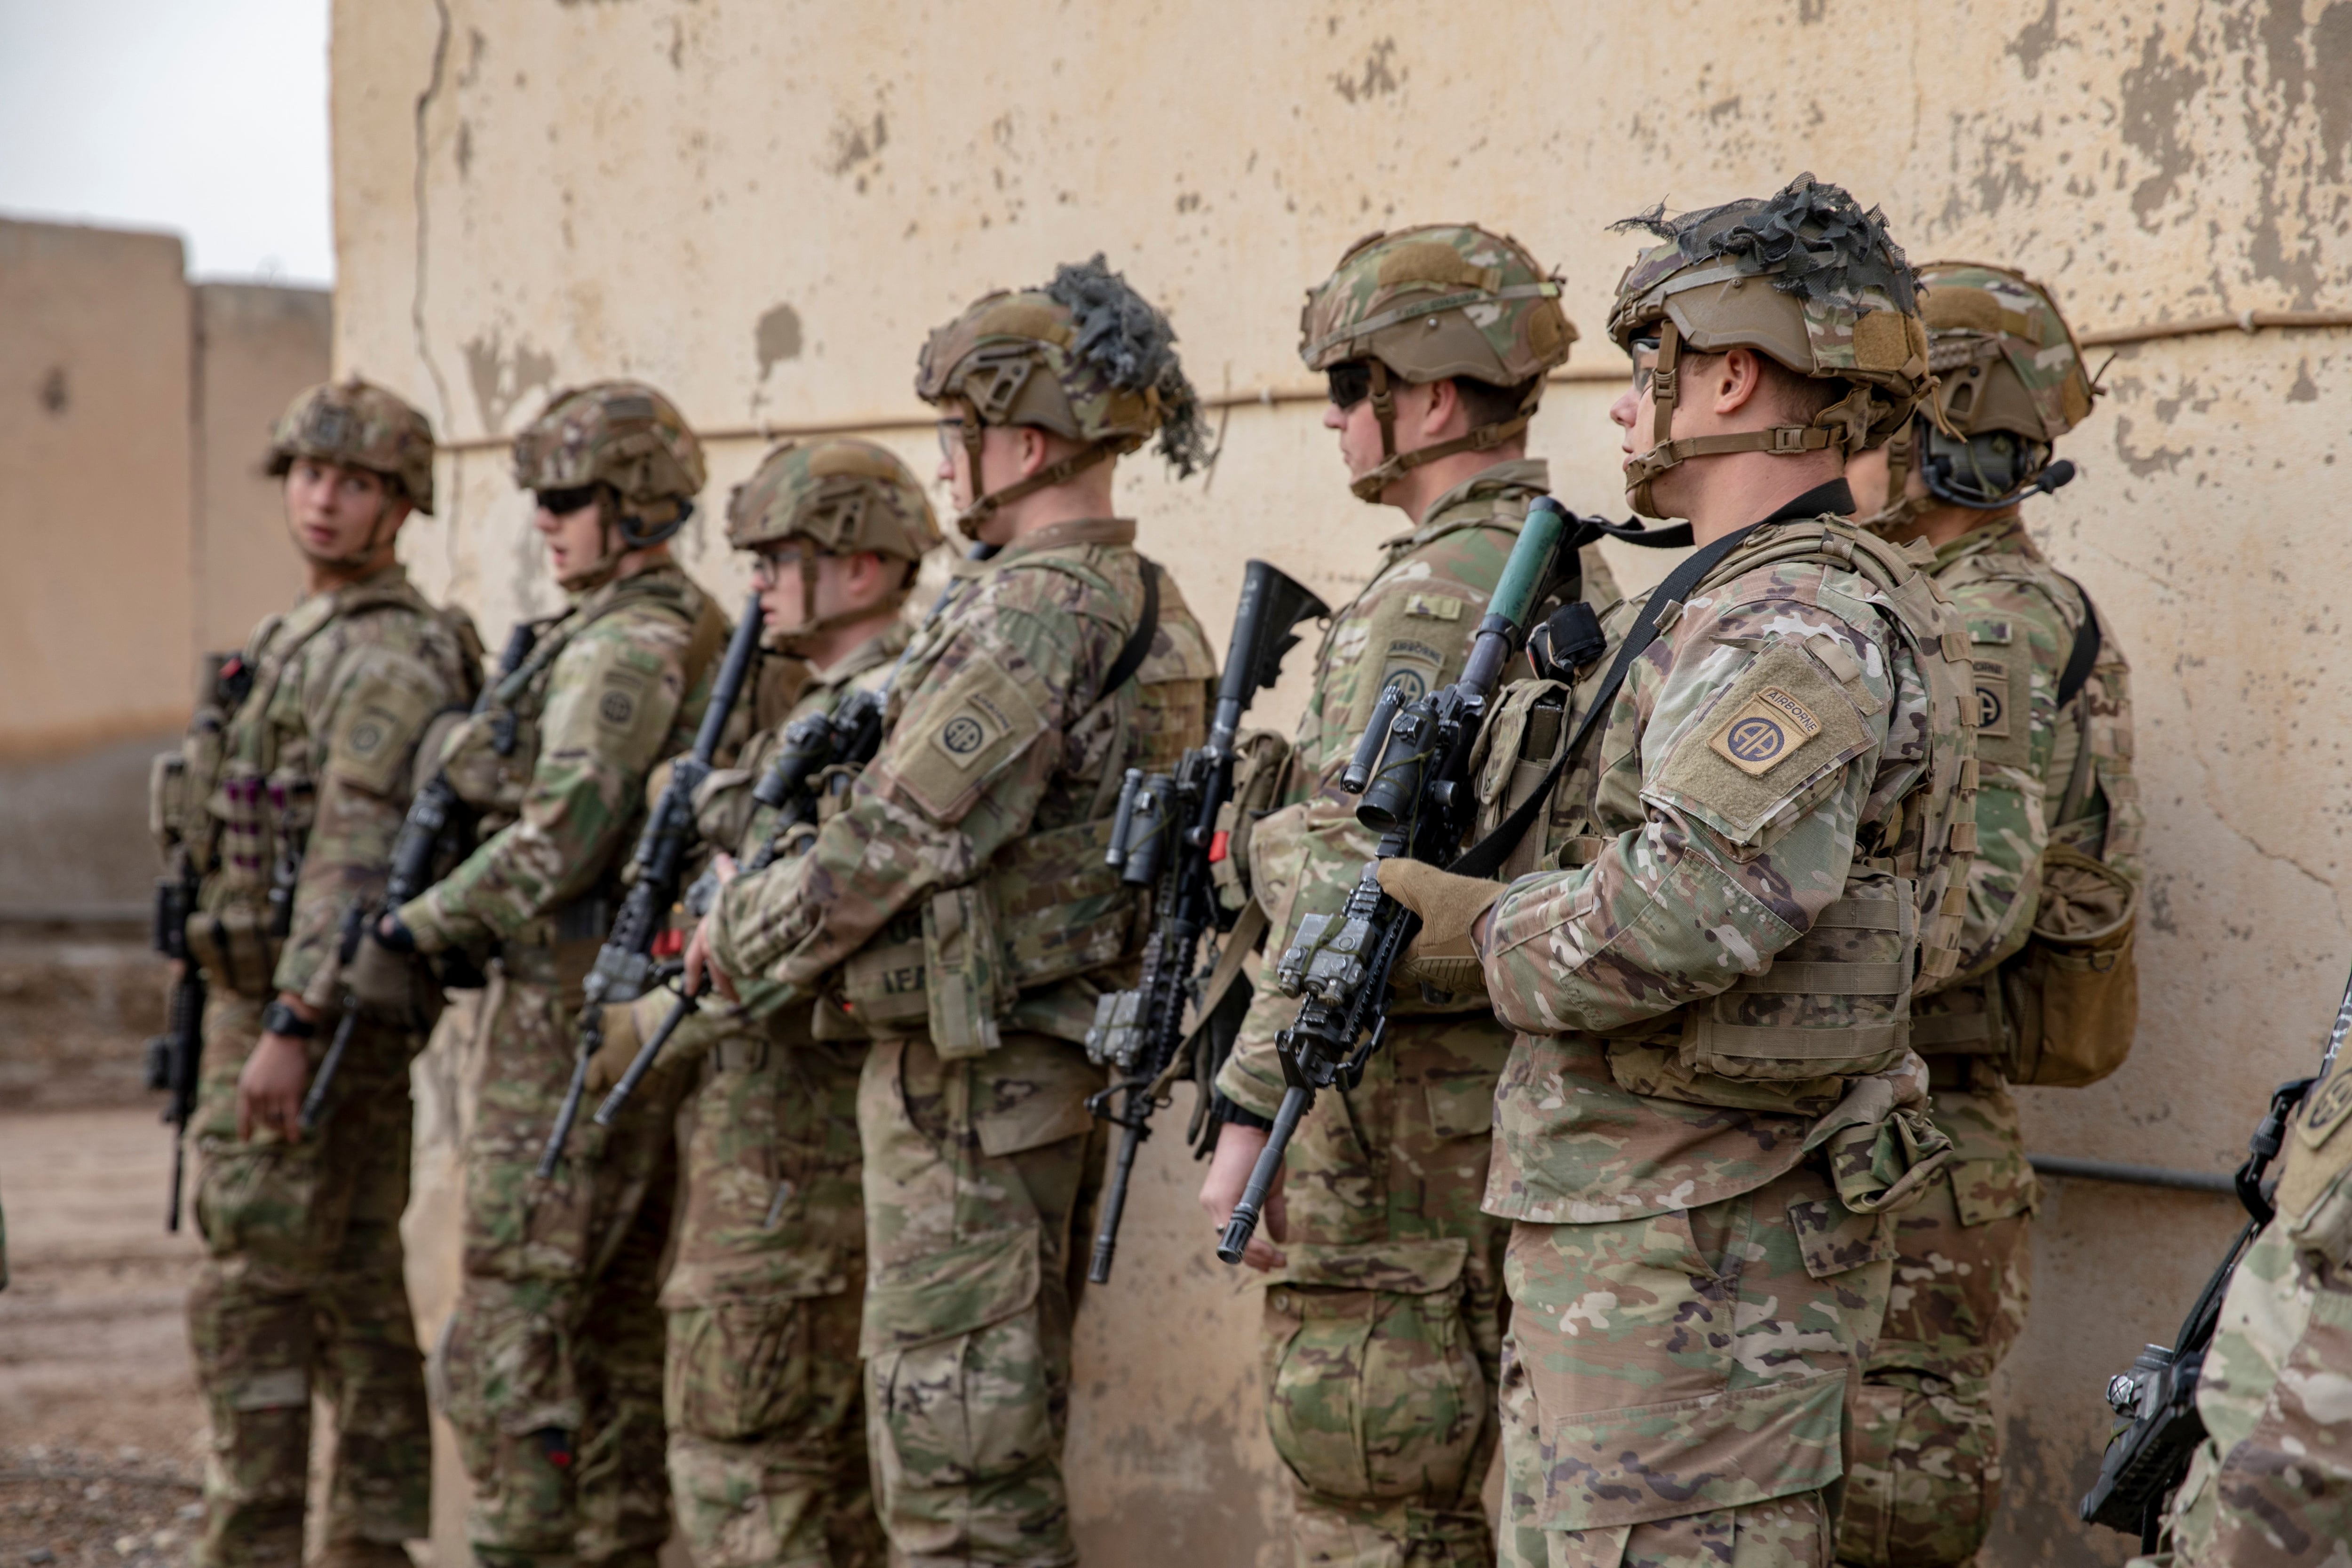 U.S. Base in Iraq Under Attack: A Defensive Strike Ensues